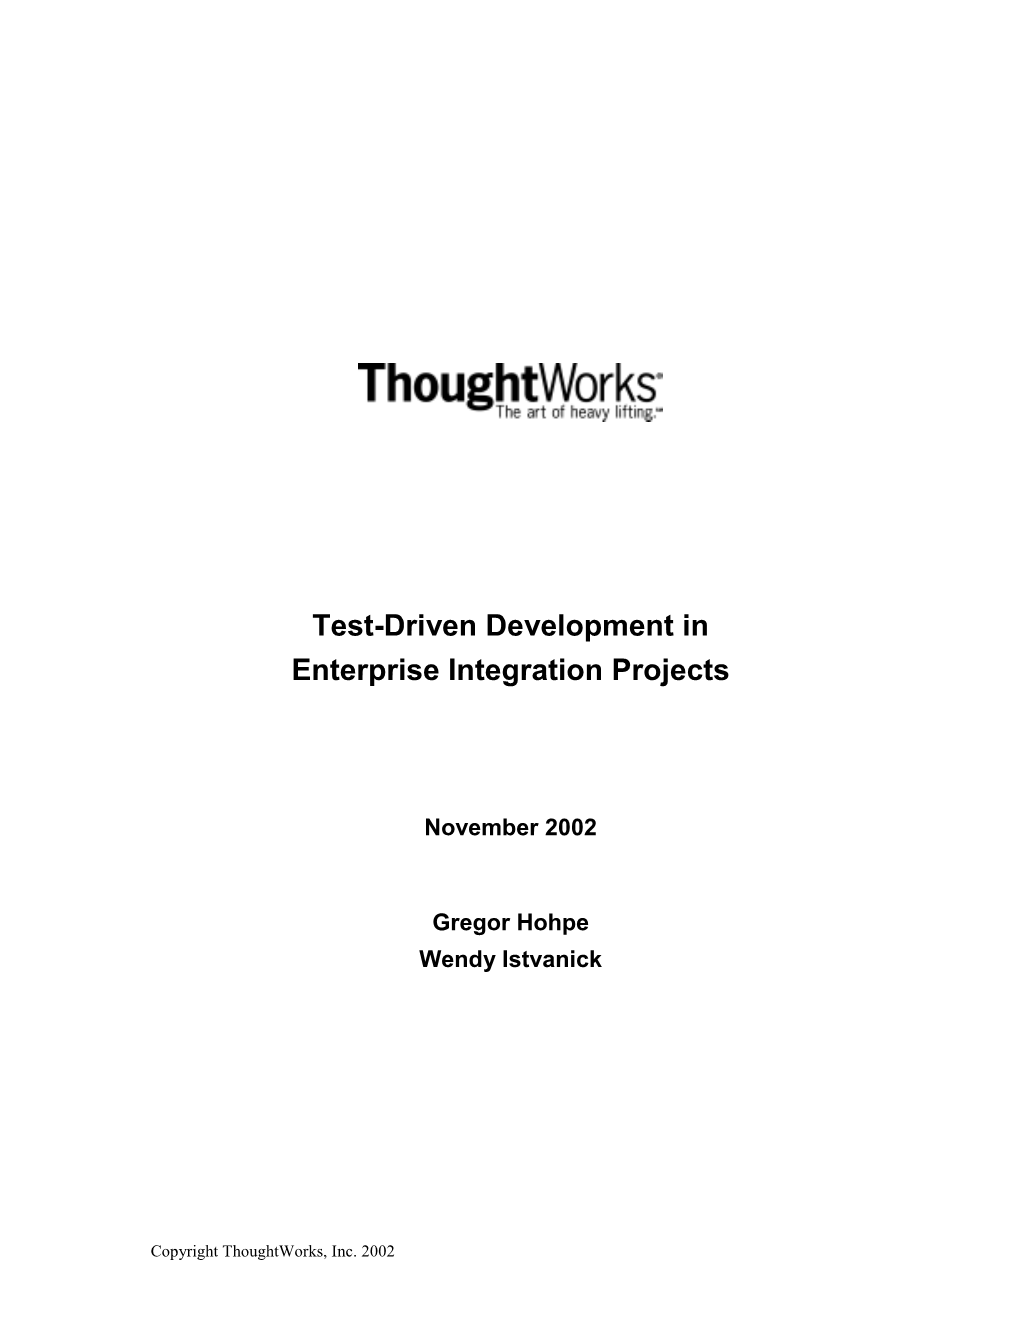 Test-Driven Development in Enterprise Integration Projects